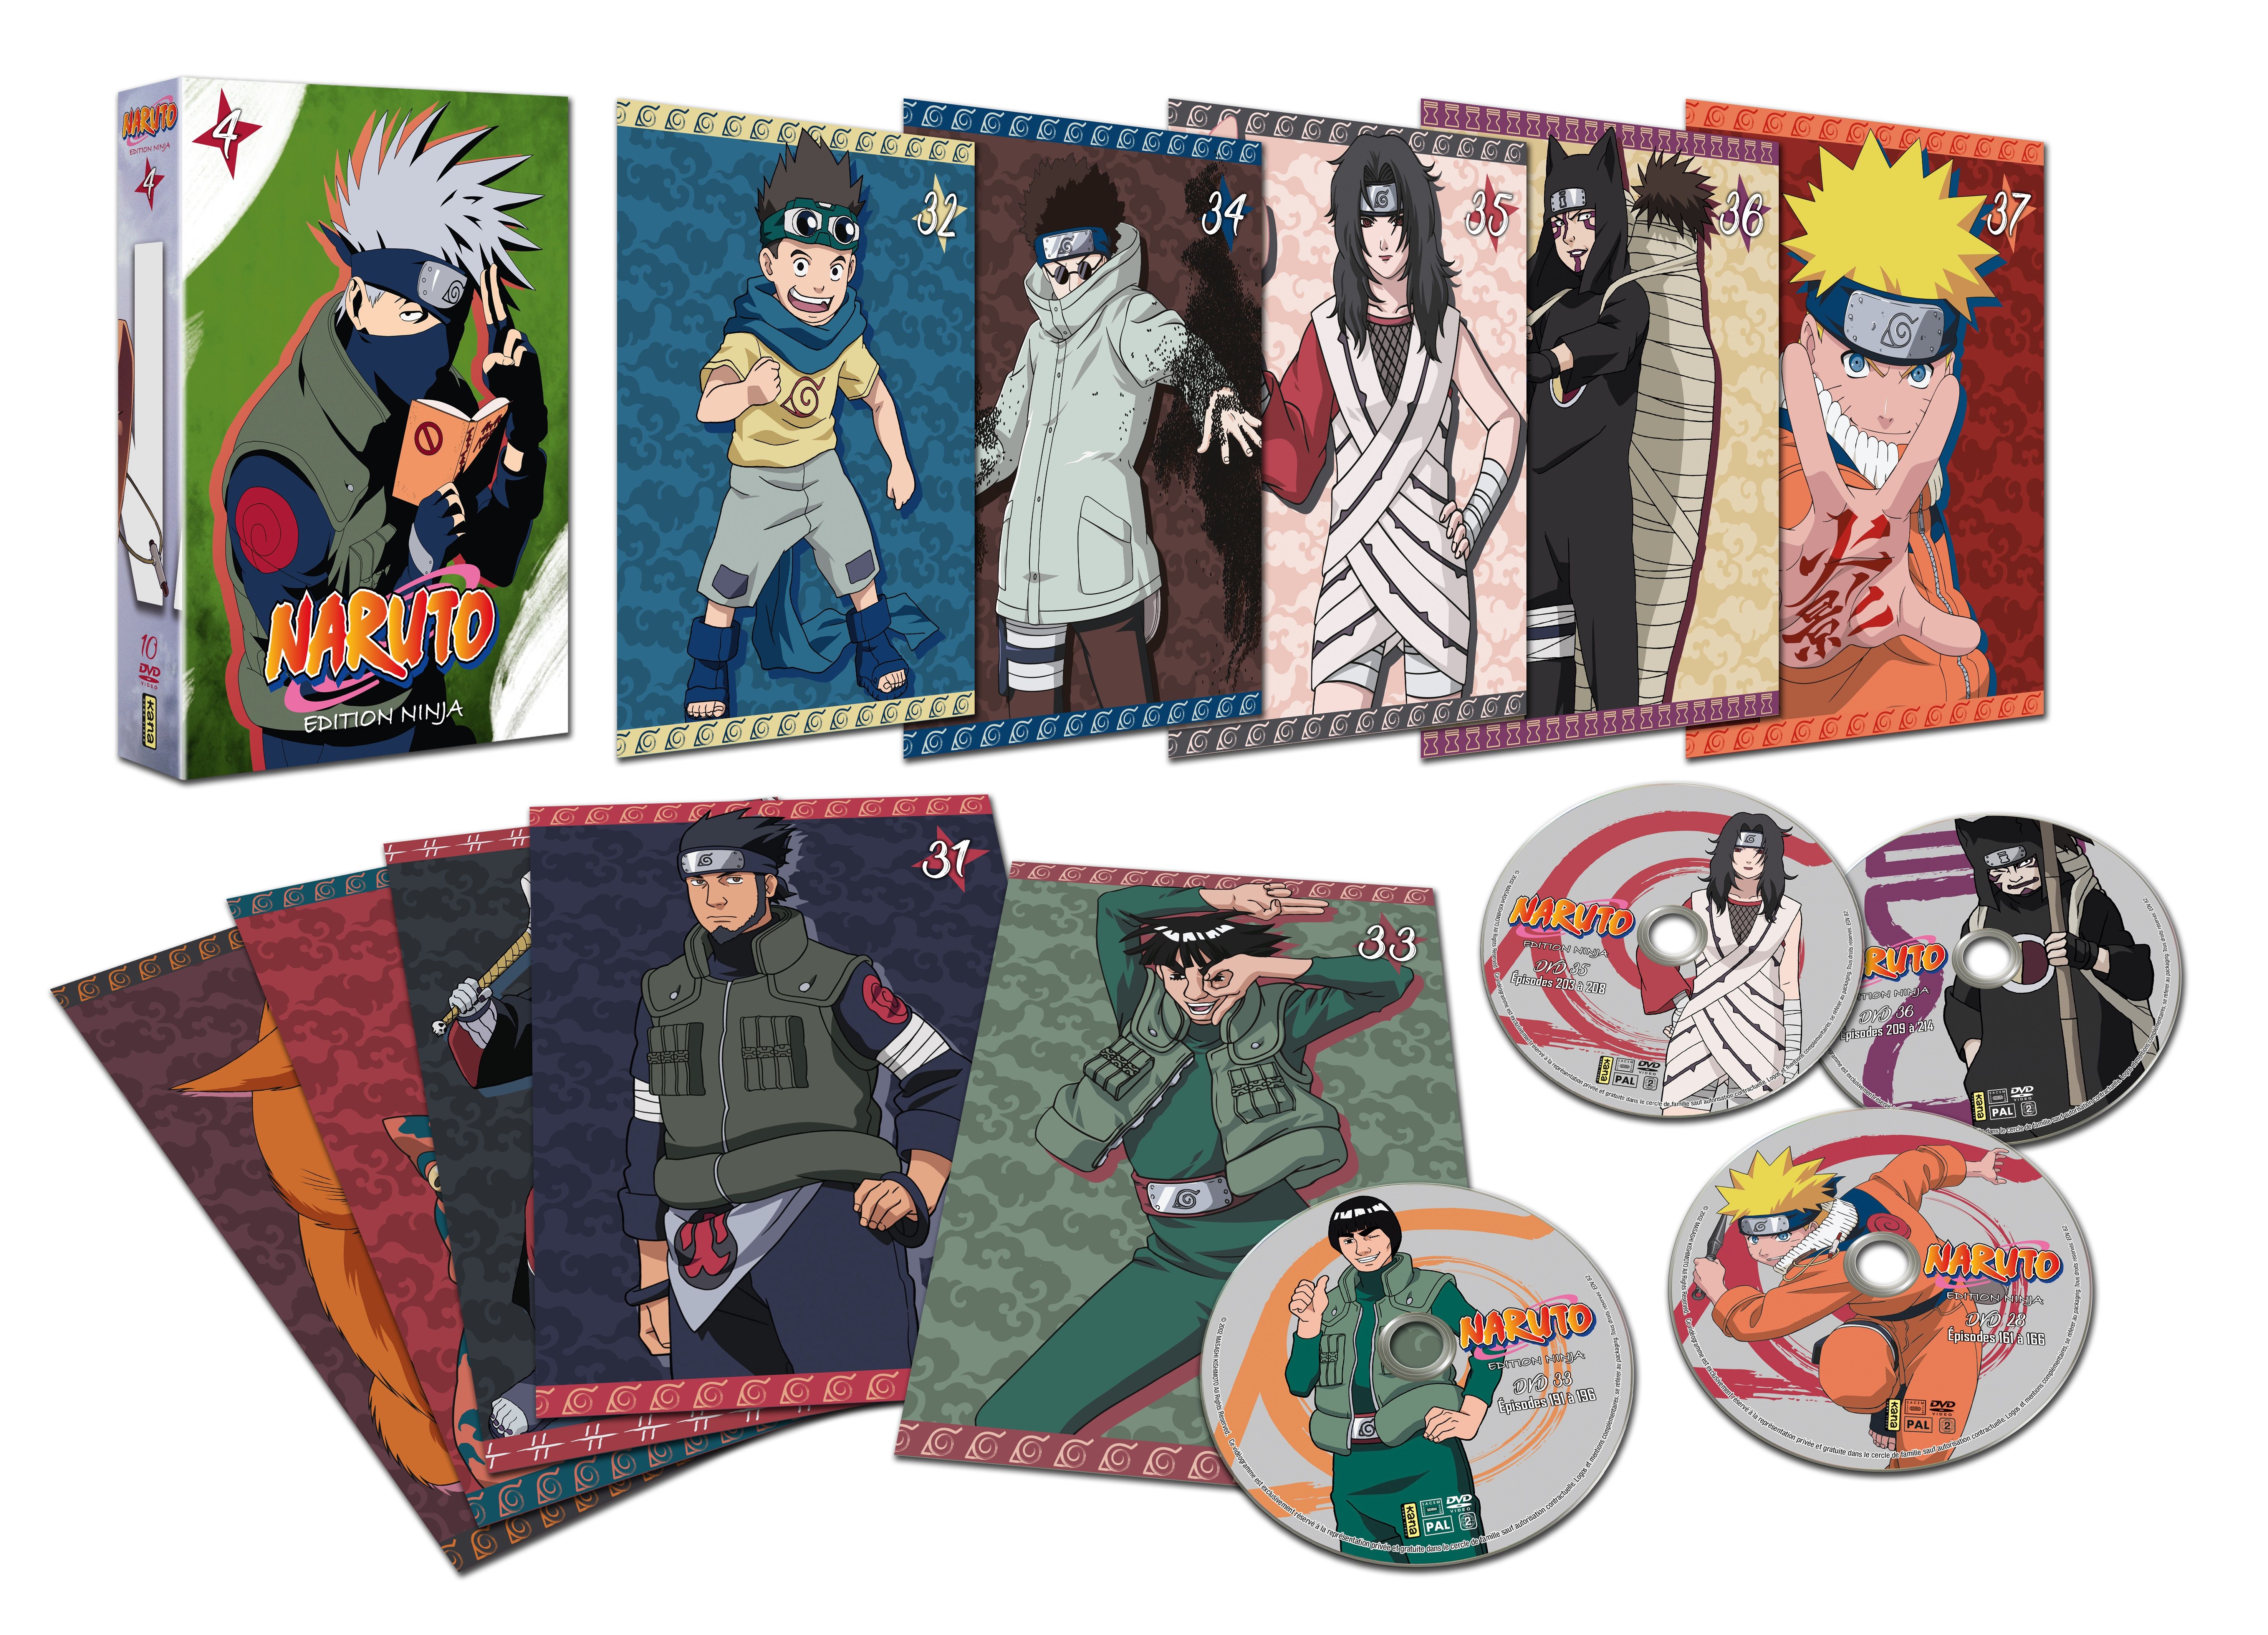 Naruto - Edition Ninja Volume 4